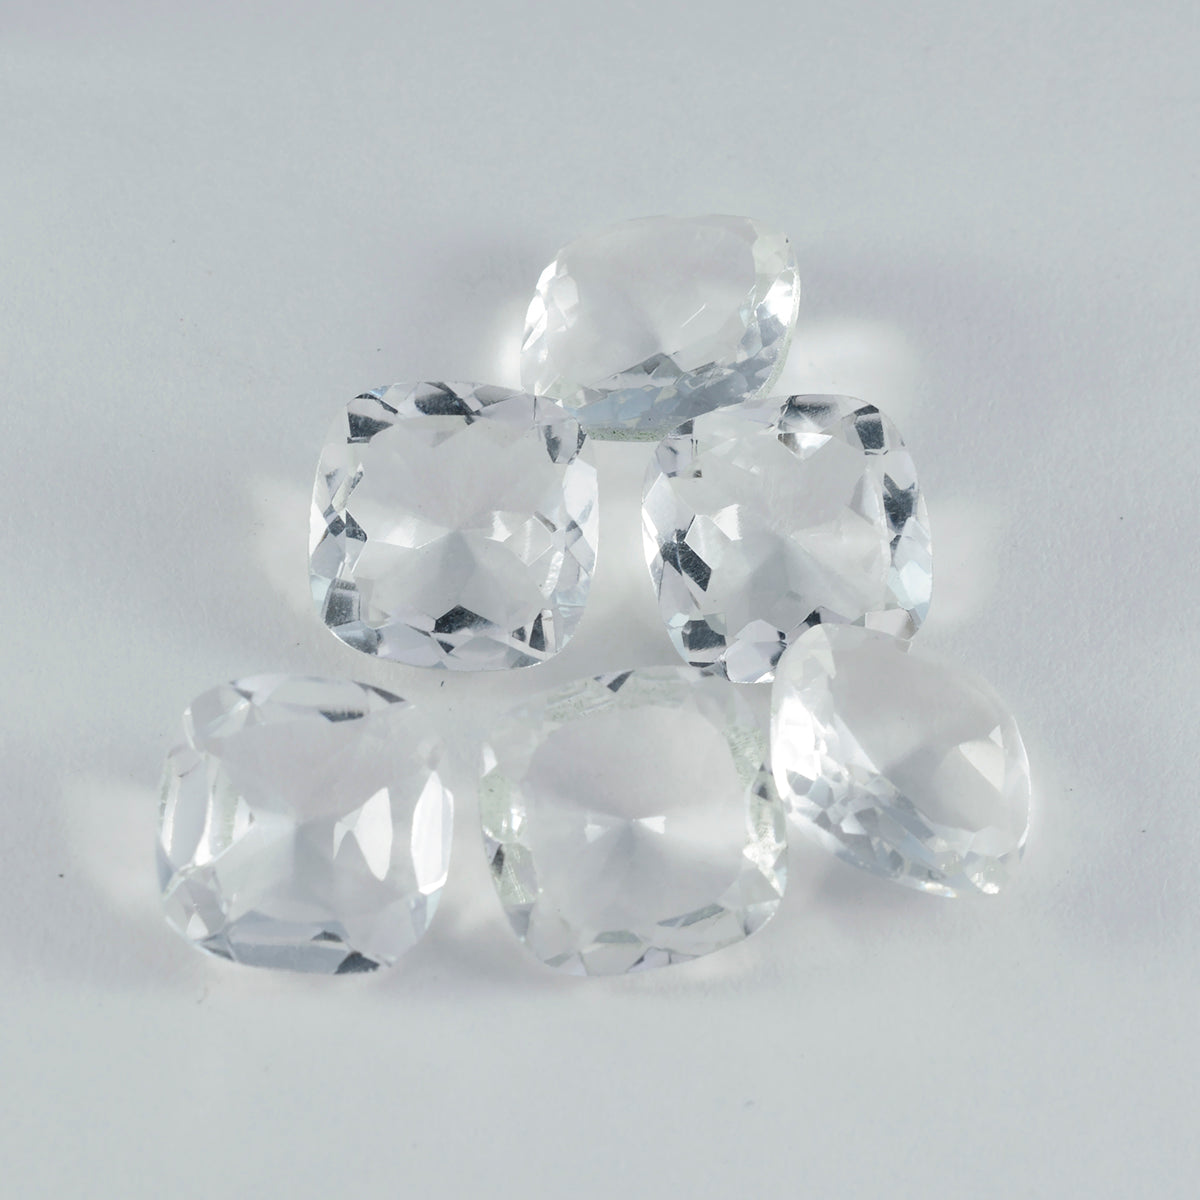 Riyogems 1PC Wit Kristal Kwarts Facet 13x13 mm Kussenvorm verbazingwekkende Kwaliteit Edelstenen